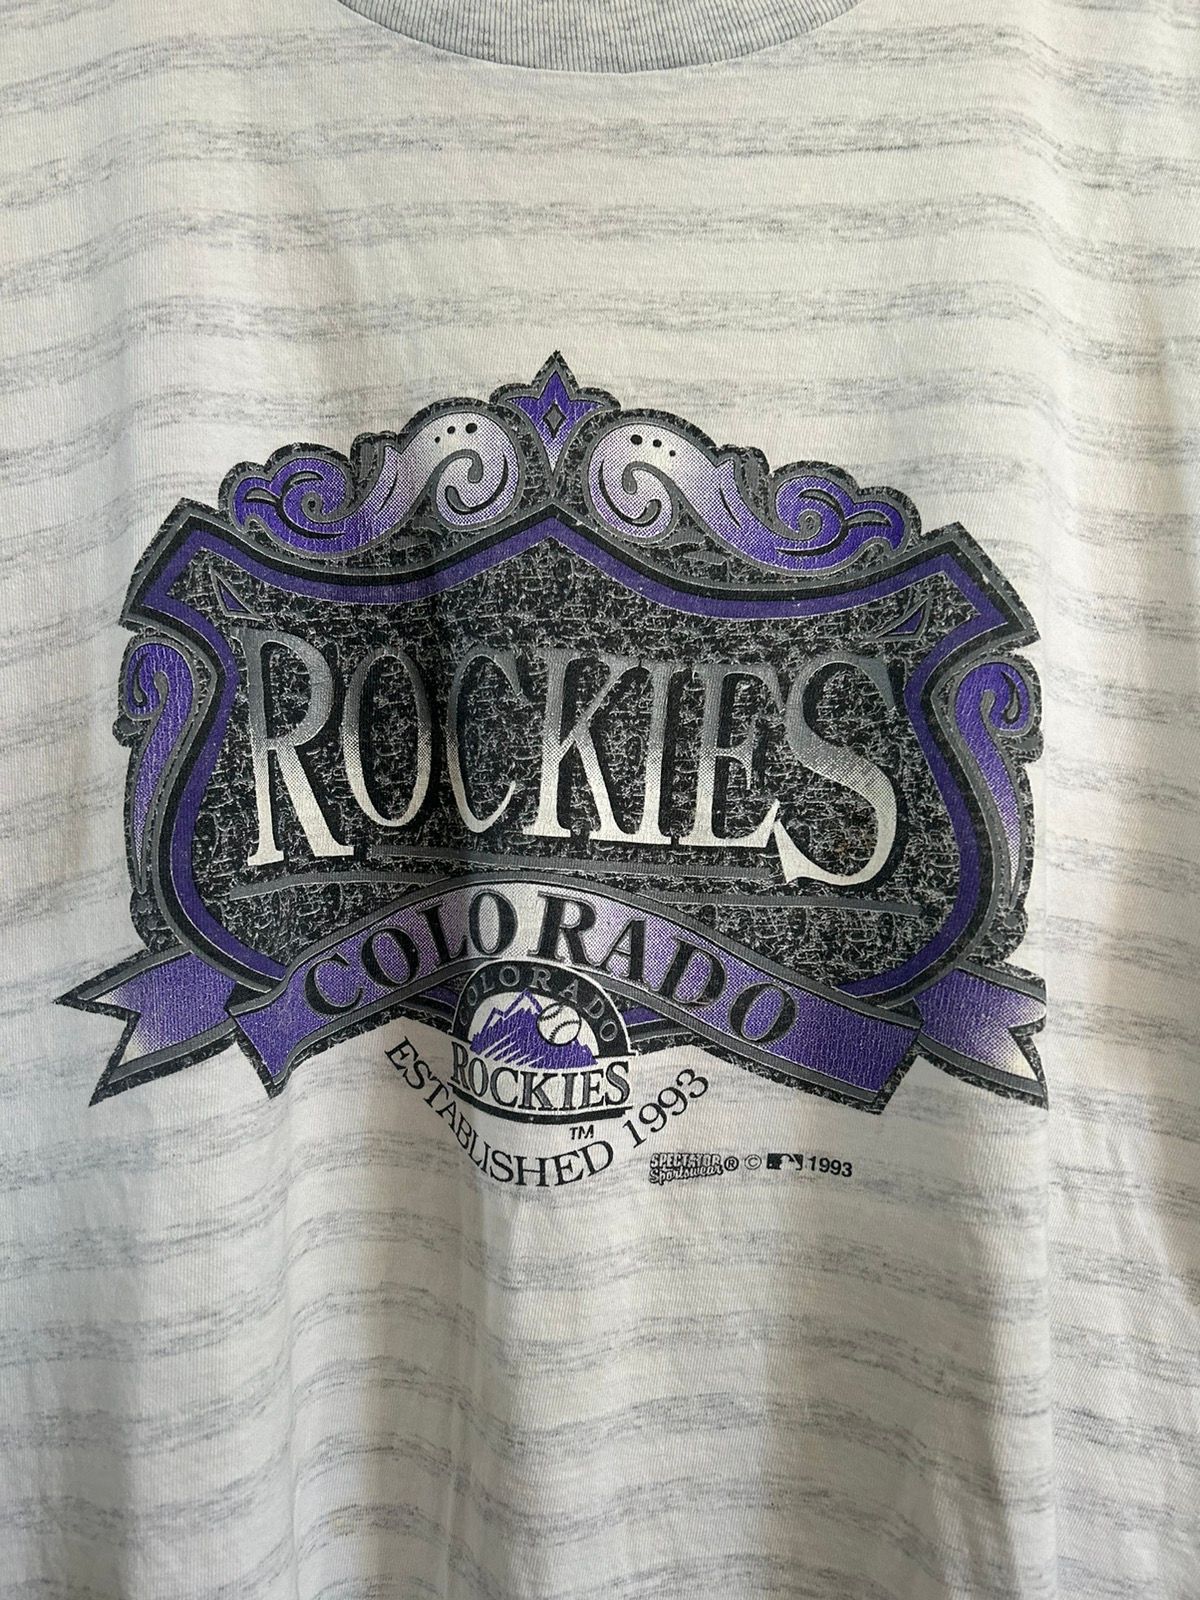 Vintage Colorado Rockies Vintage 90s T Shirt XL USA Made 1993 Size US XL / EU 56 / 4 - 2 Preview